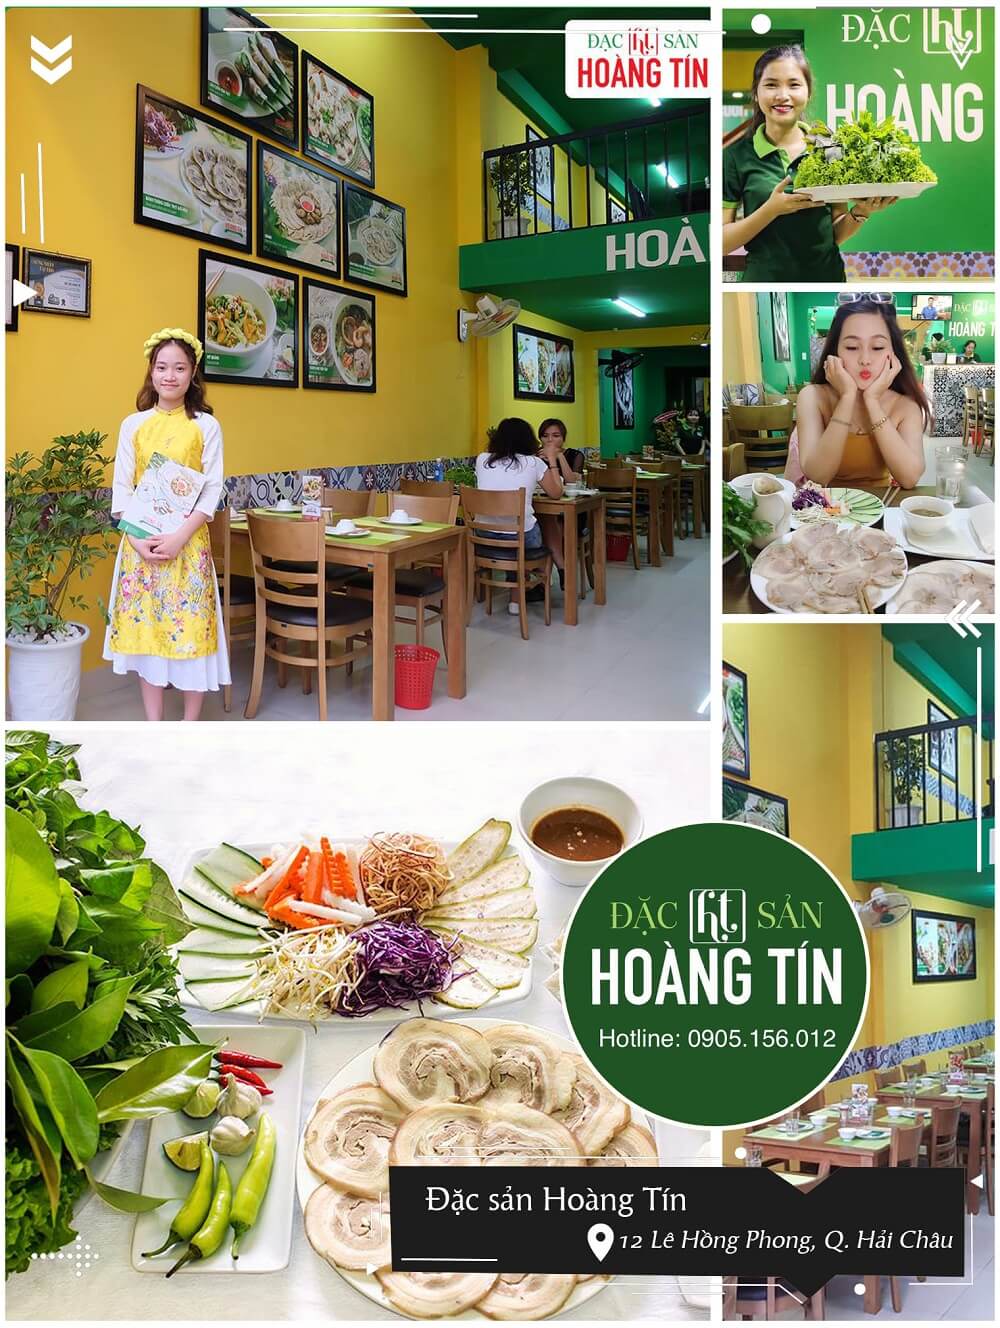 Dac San Hoang Tin 12 Le Hong Phong Quan Hai Chau Co So Dich Vu Du Lich An Uong Dat Chuan Tai Dia Ban Thanh Pho Danang